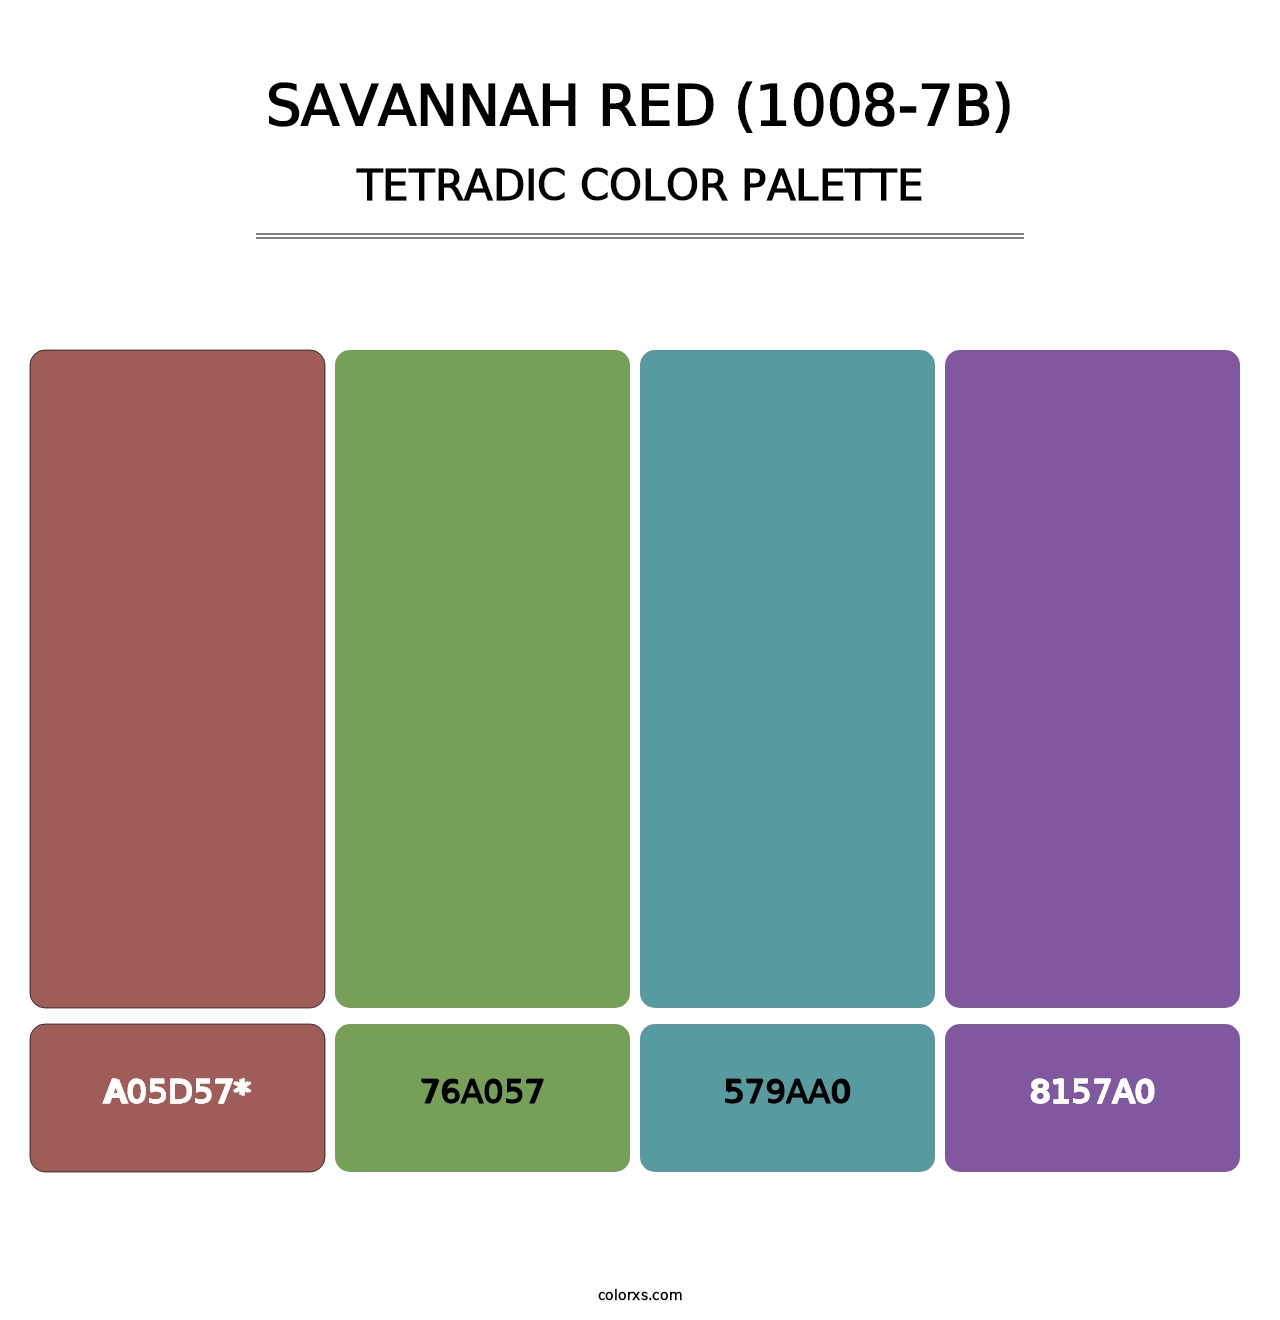 Savannah Red (1008-7B) - Tetradic Color Palette